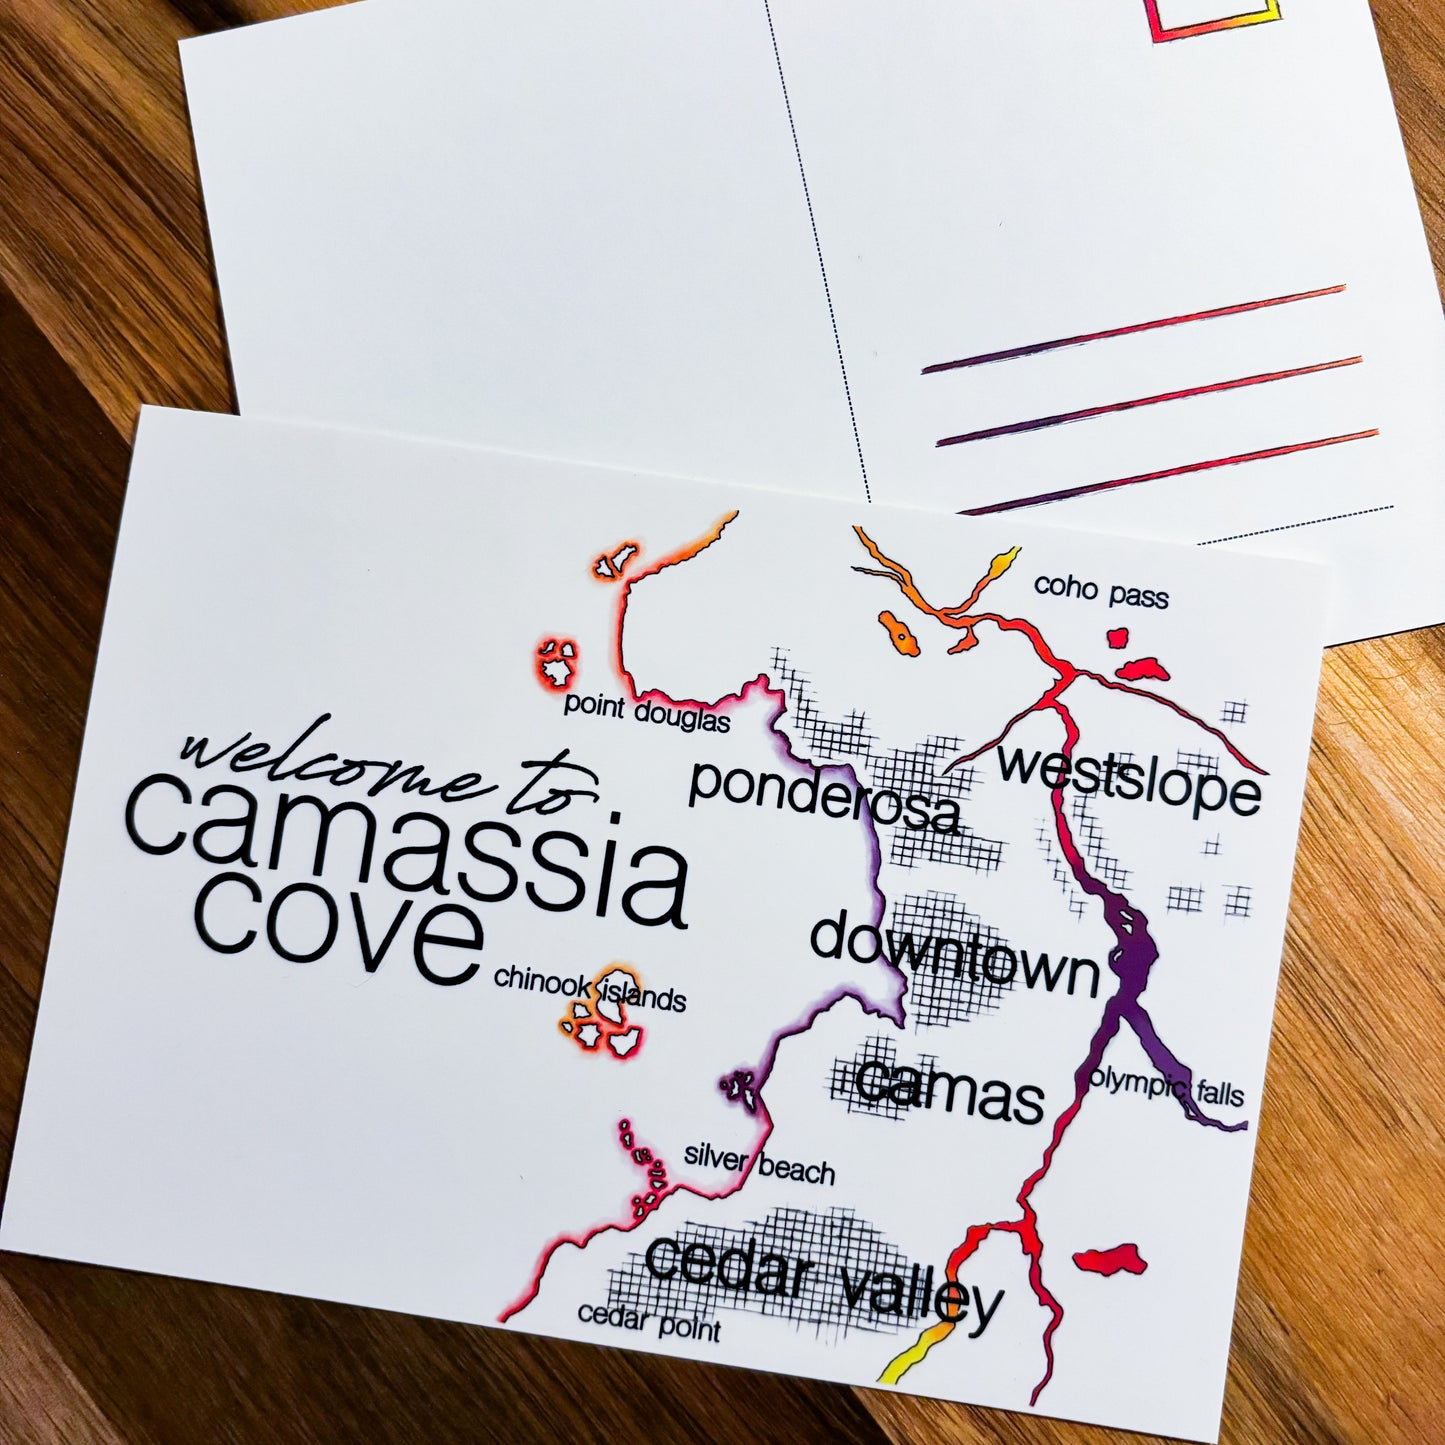 Postcard - Camassia Cove